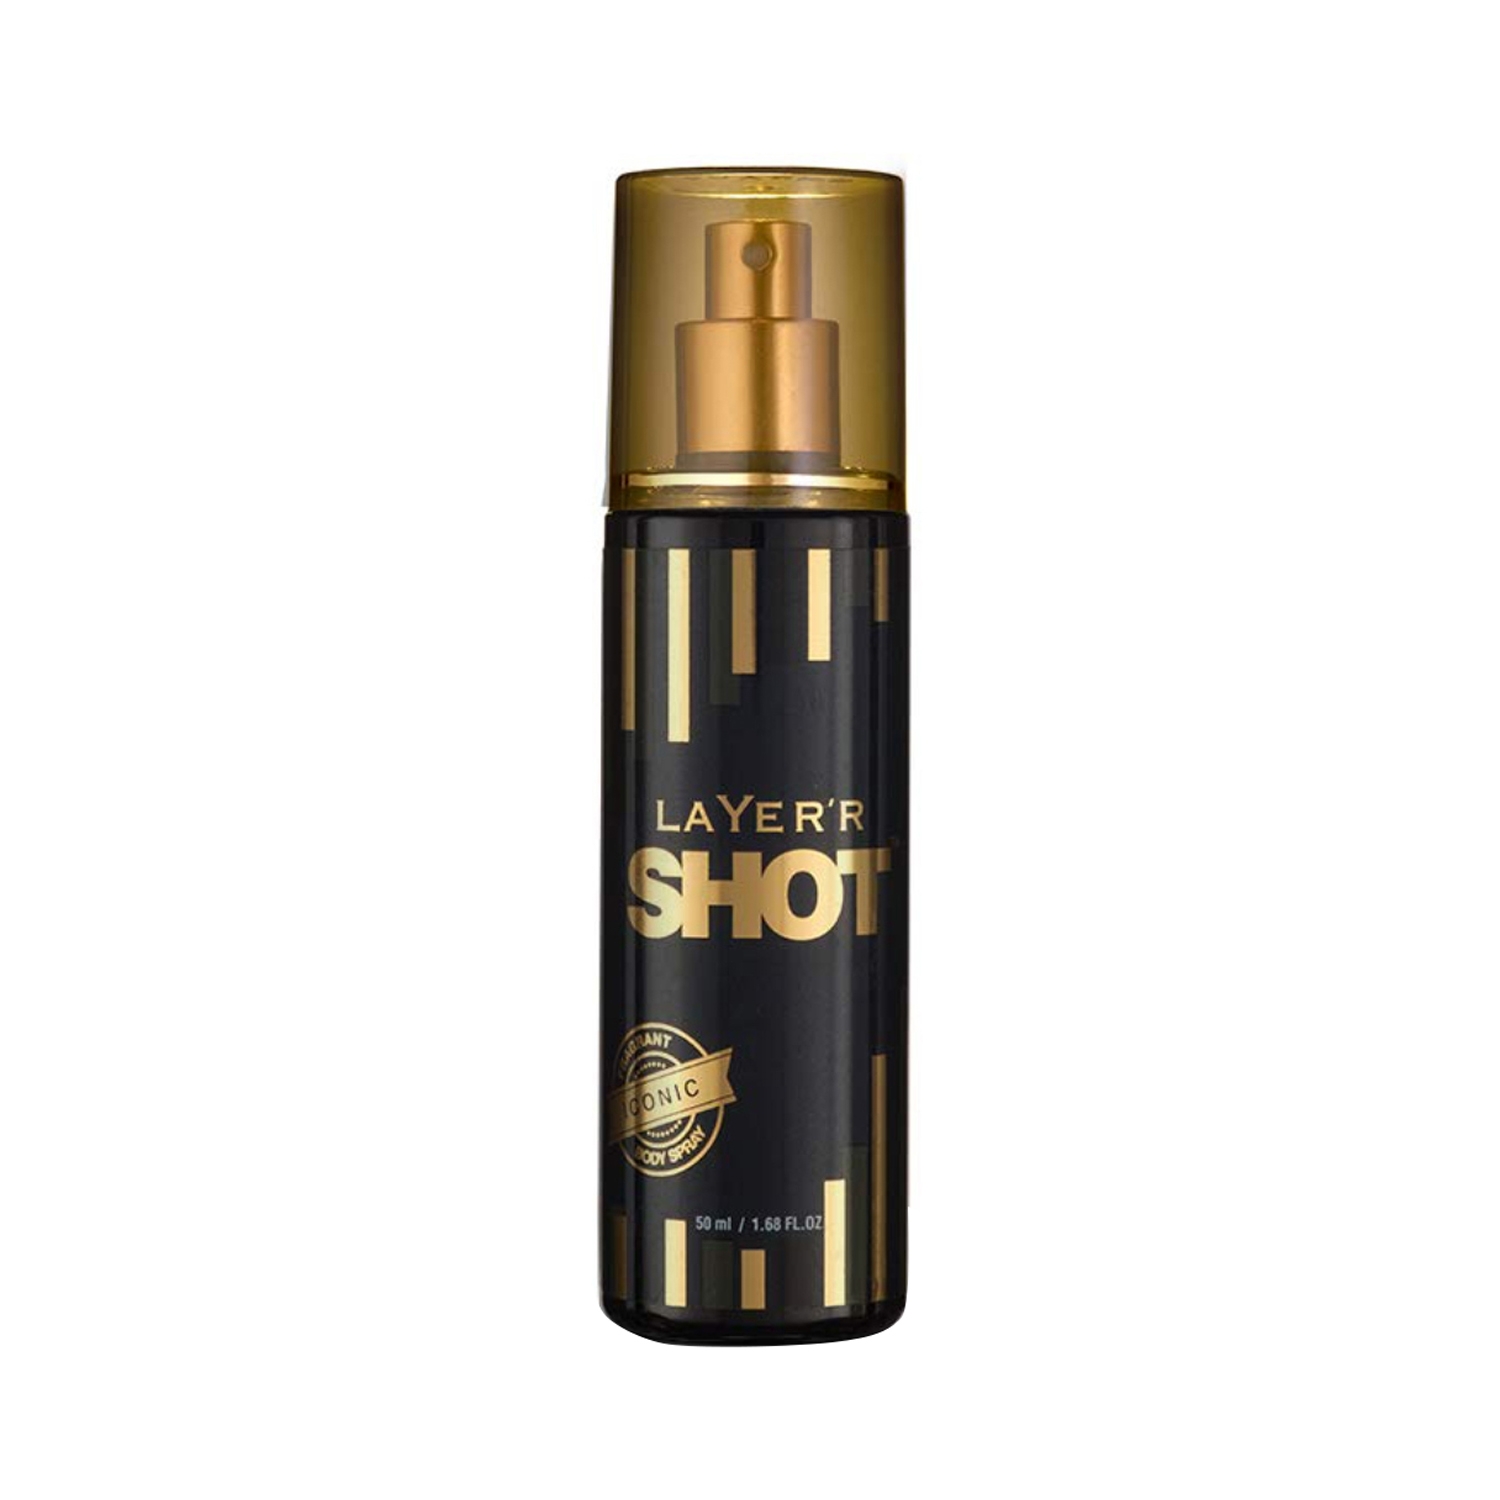 Layer'r Shot | Layer'r Shot Gold Iconic Body Spray (50ml)